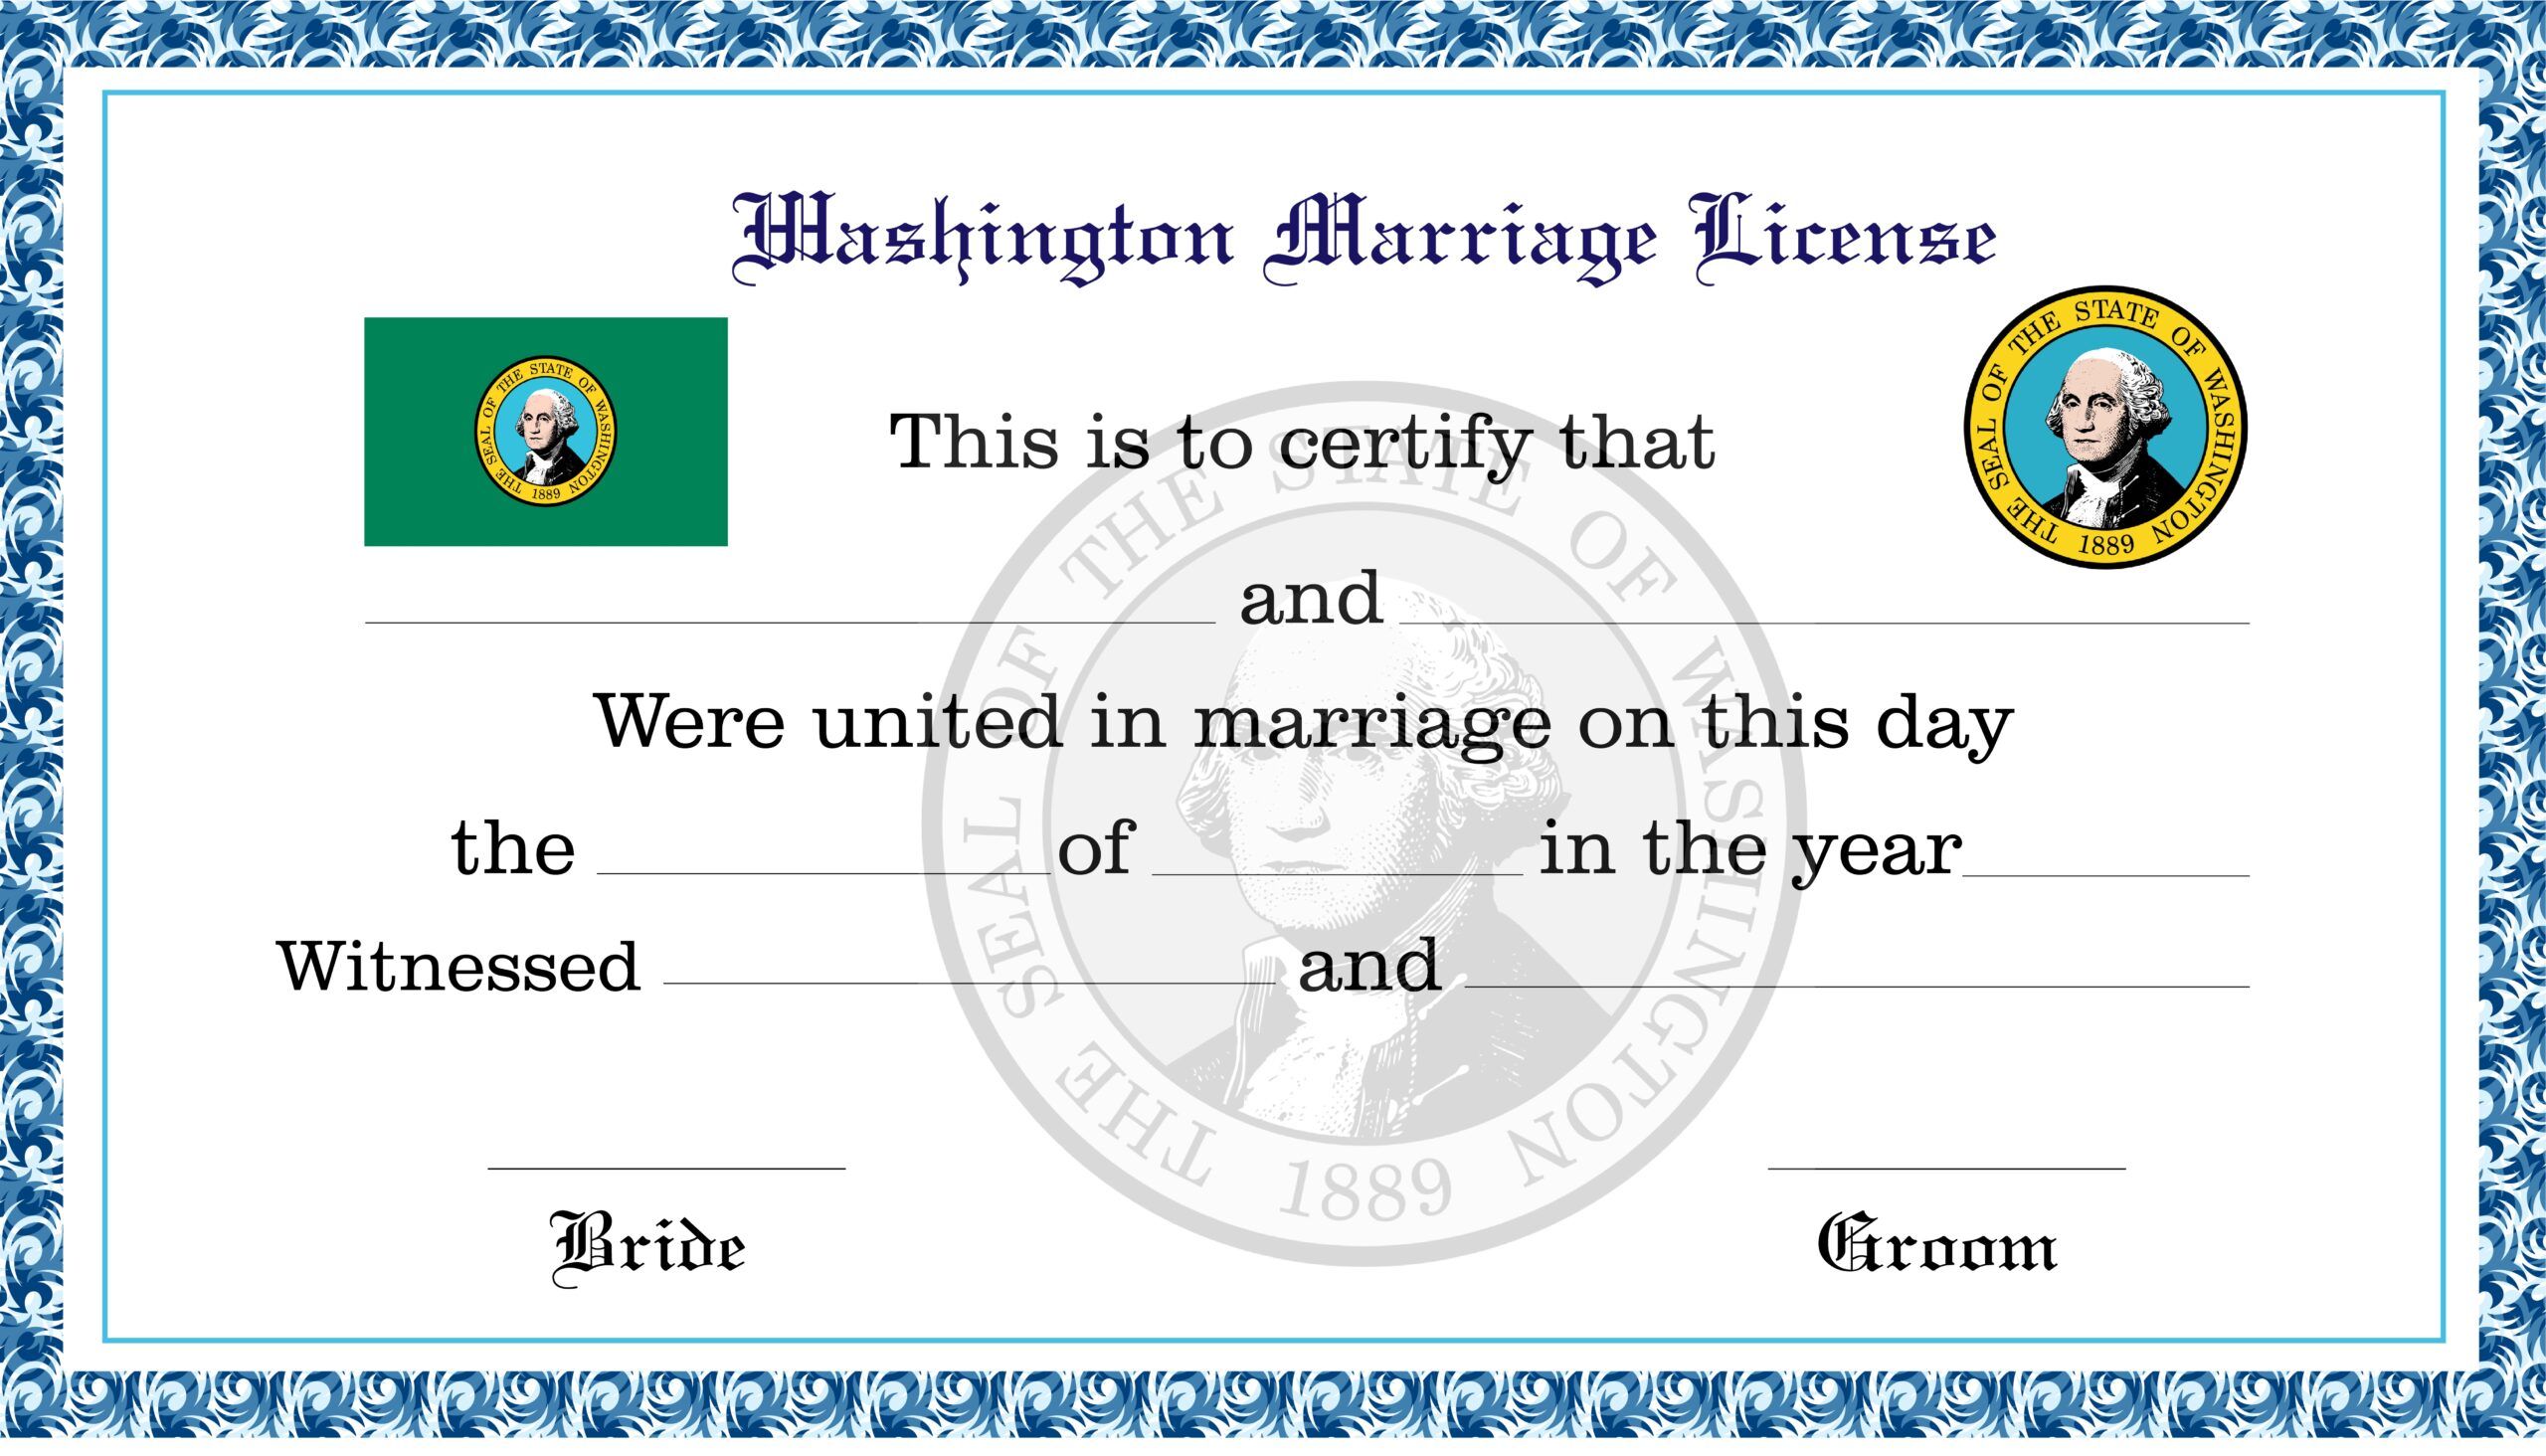 washington-marriage-license-license-lookup